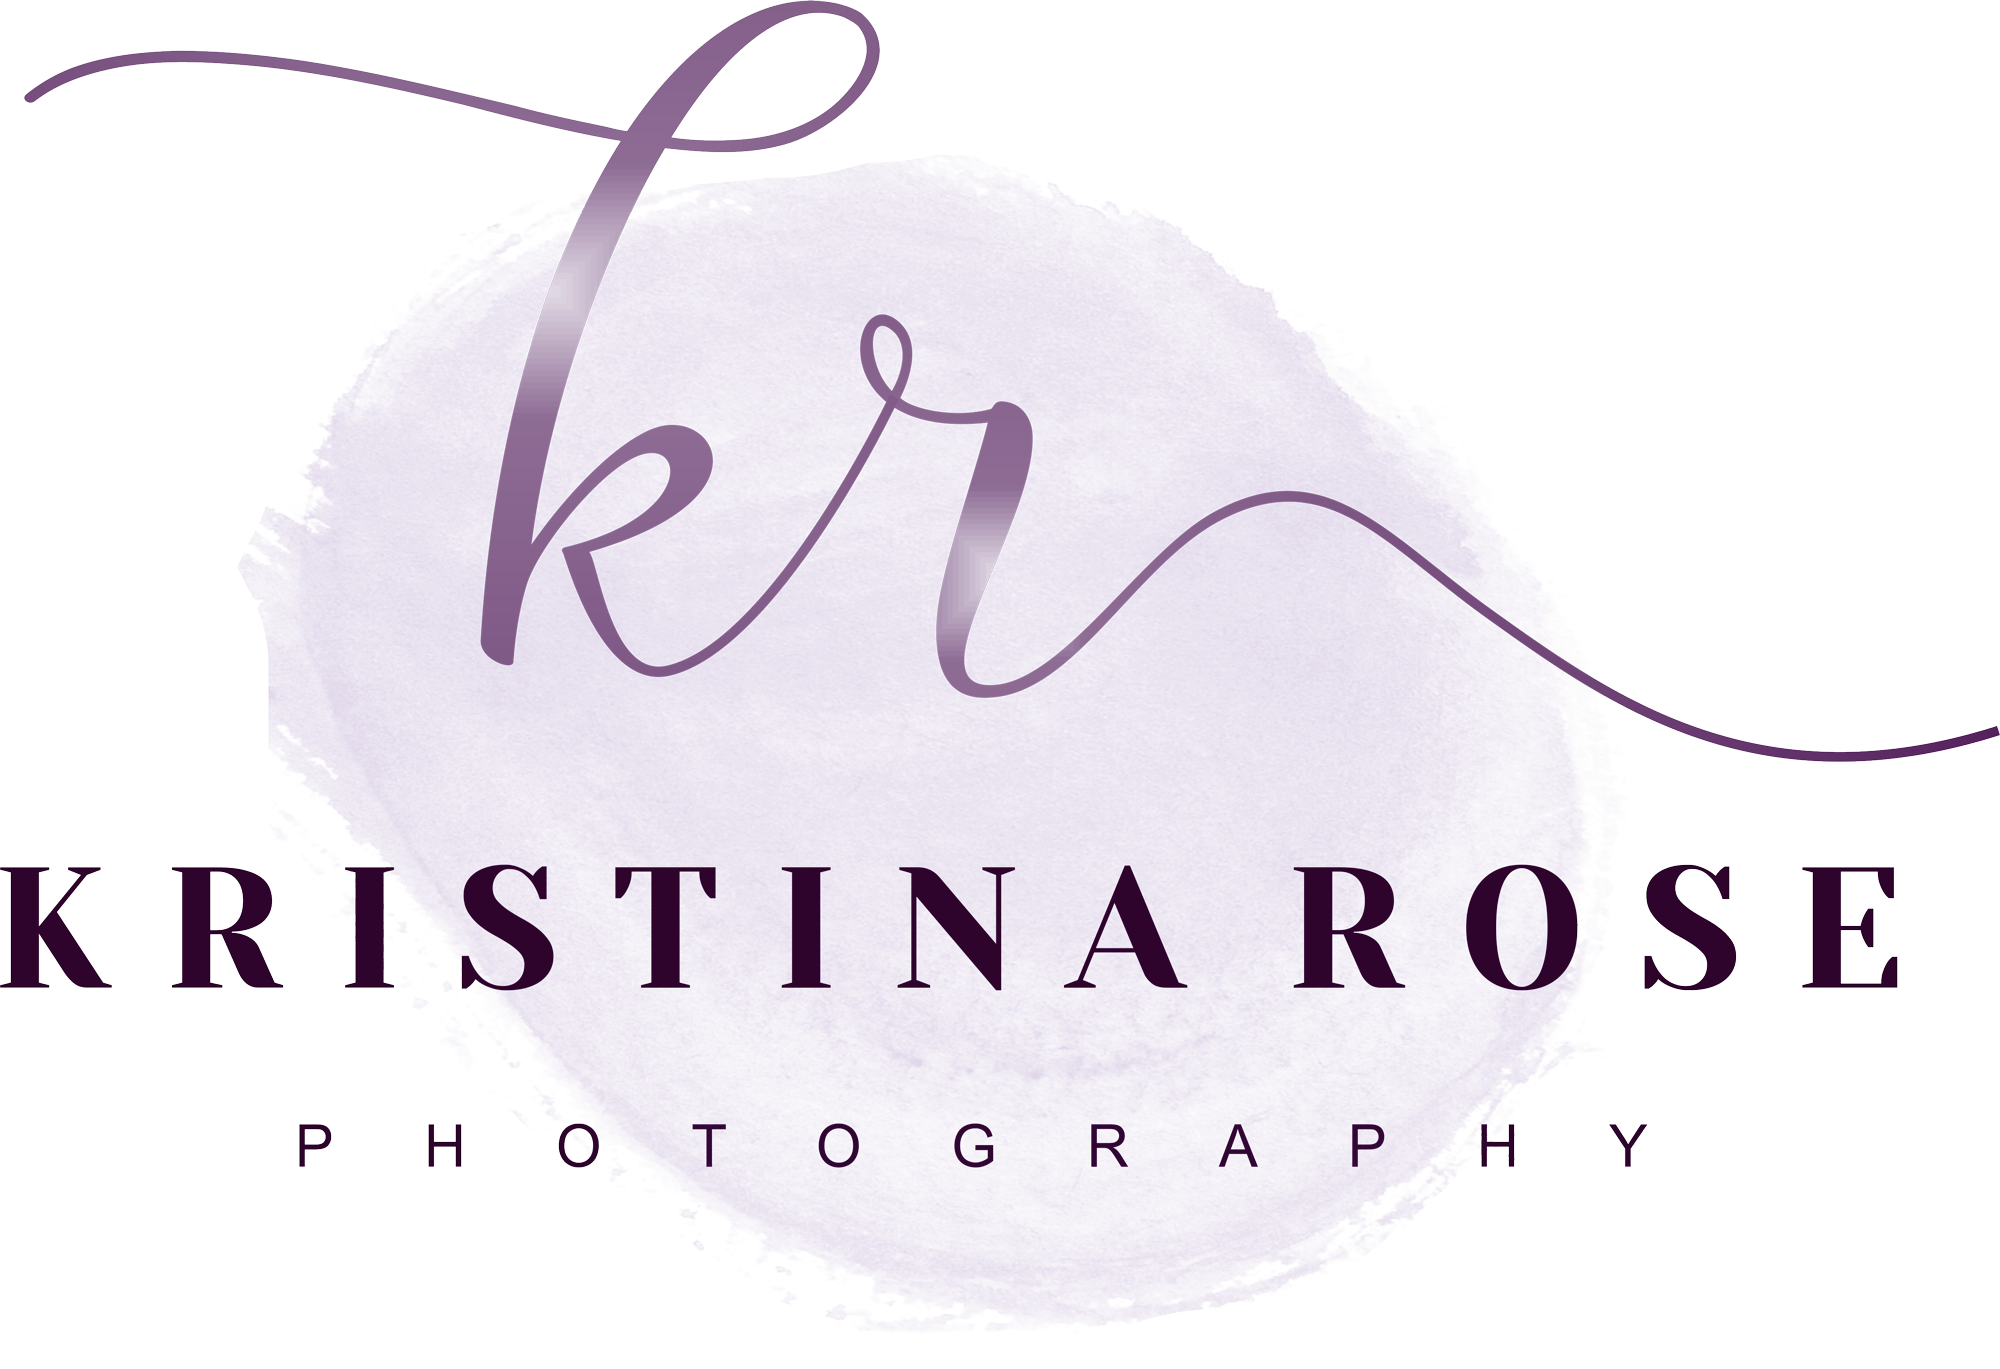 Kristina rose website